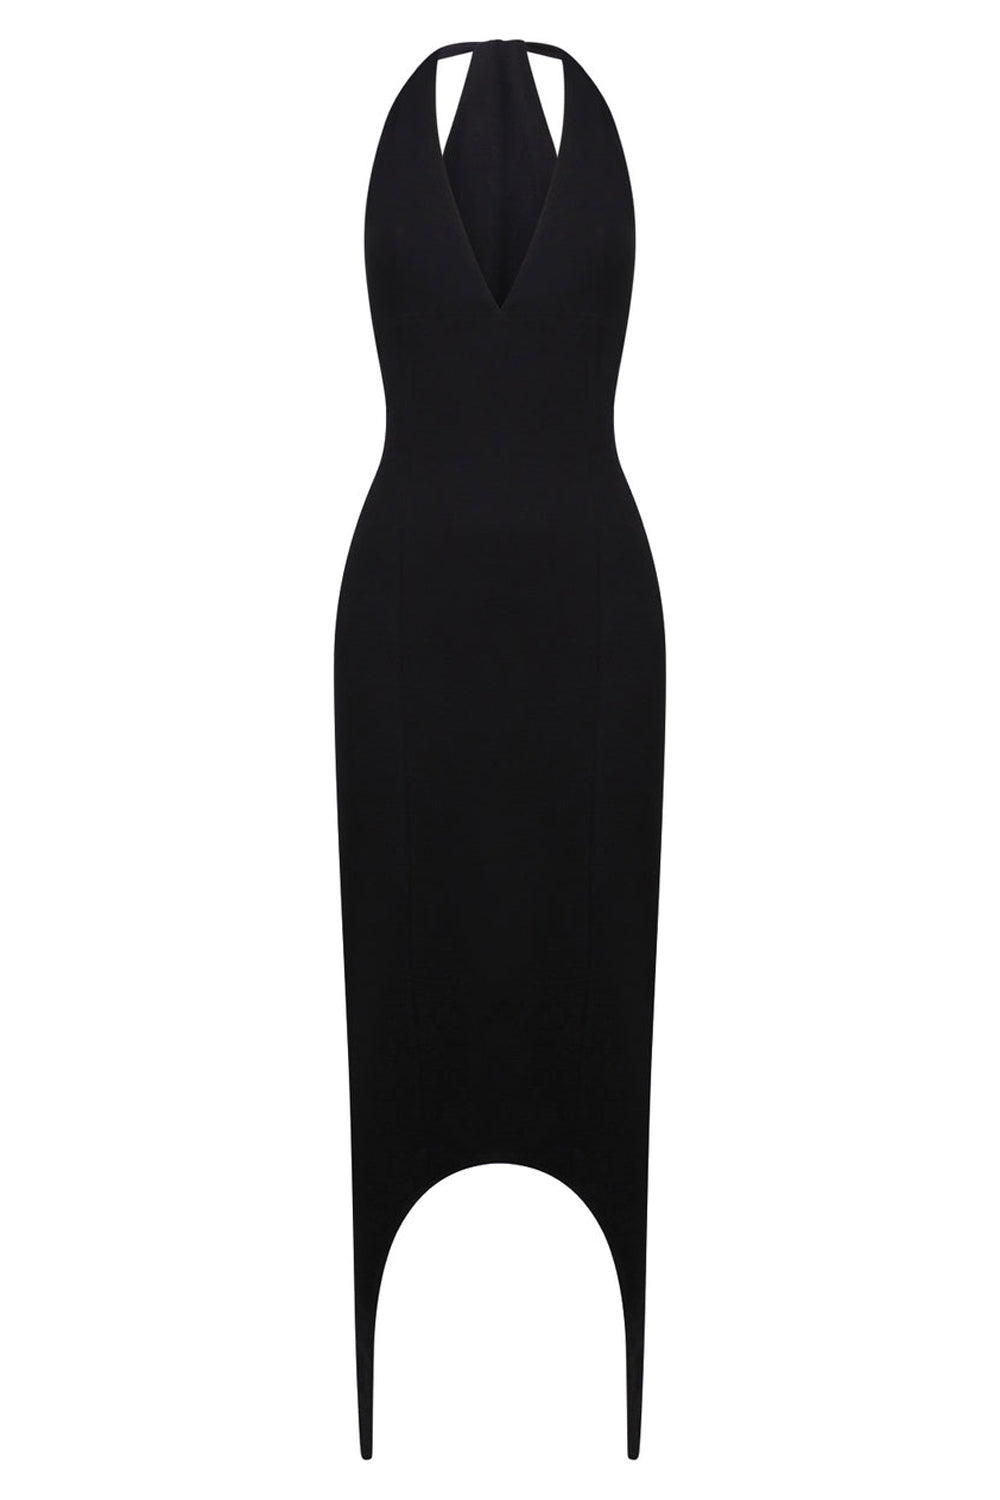 PATOU DRESSES CURVE DRESS | BLACK